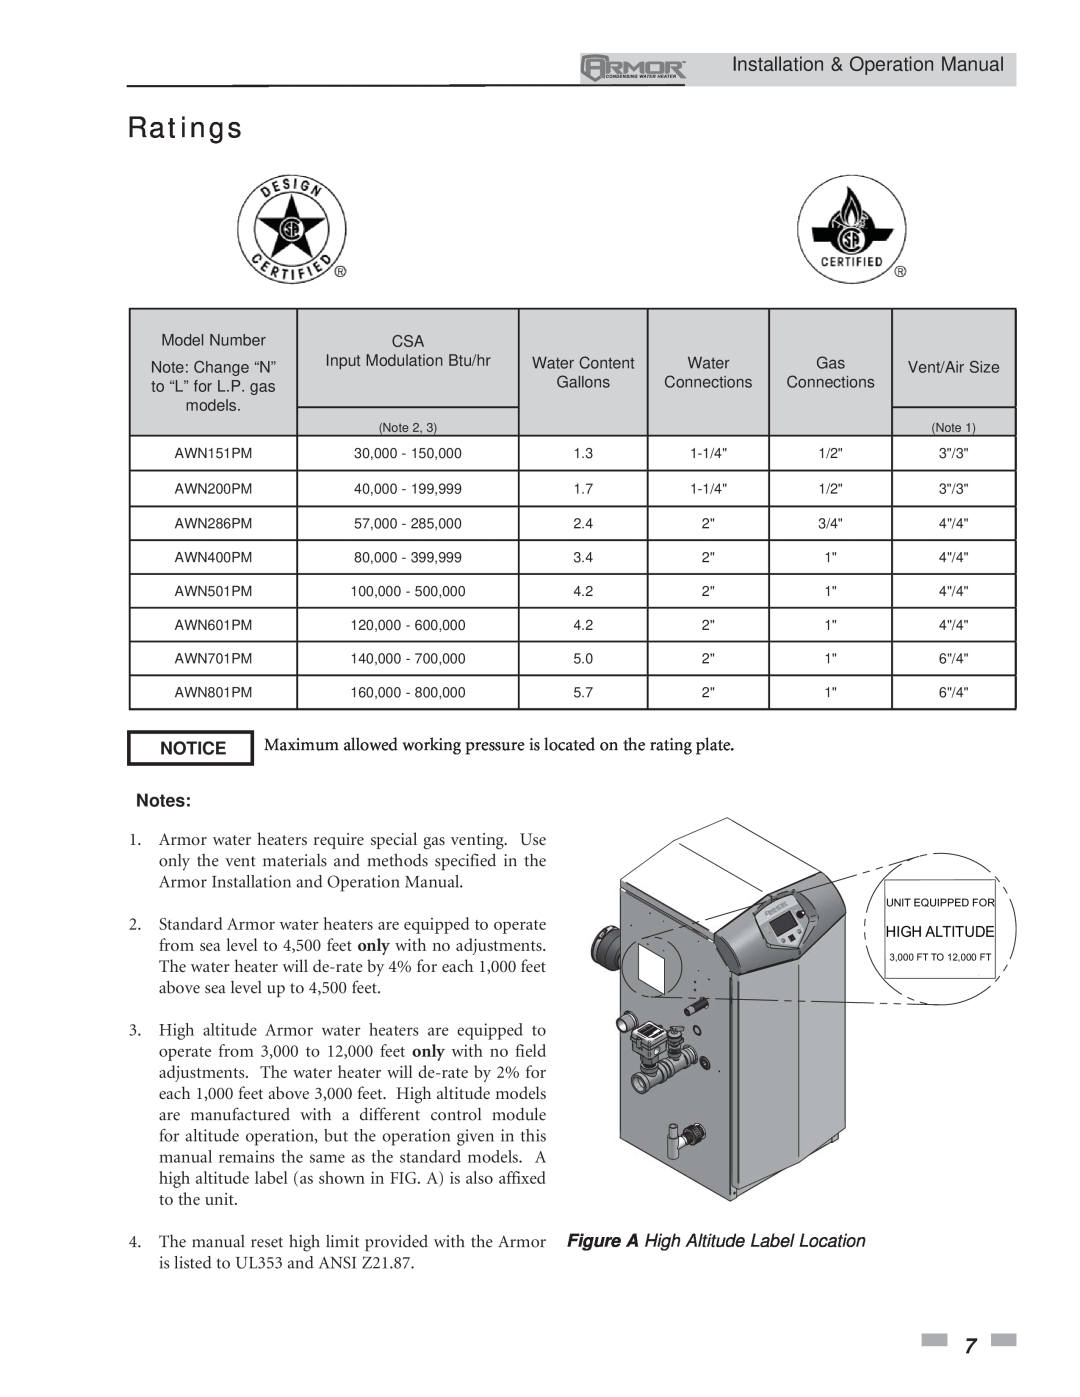 Lochinvar 151 operation manual Ratings, Notes, Installation & Operation Manual 